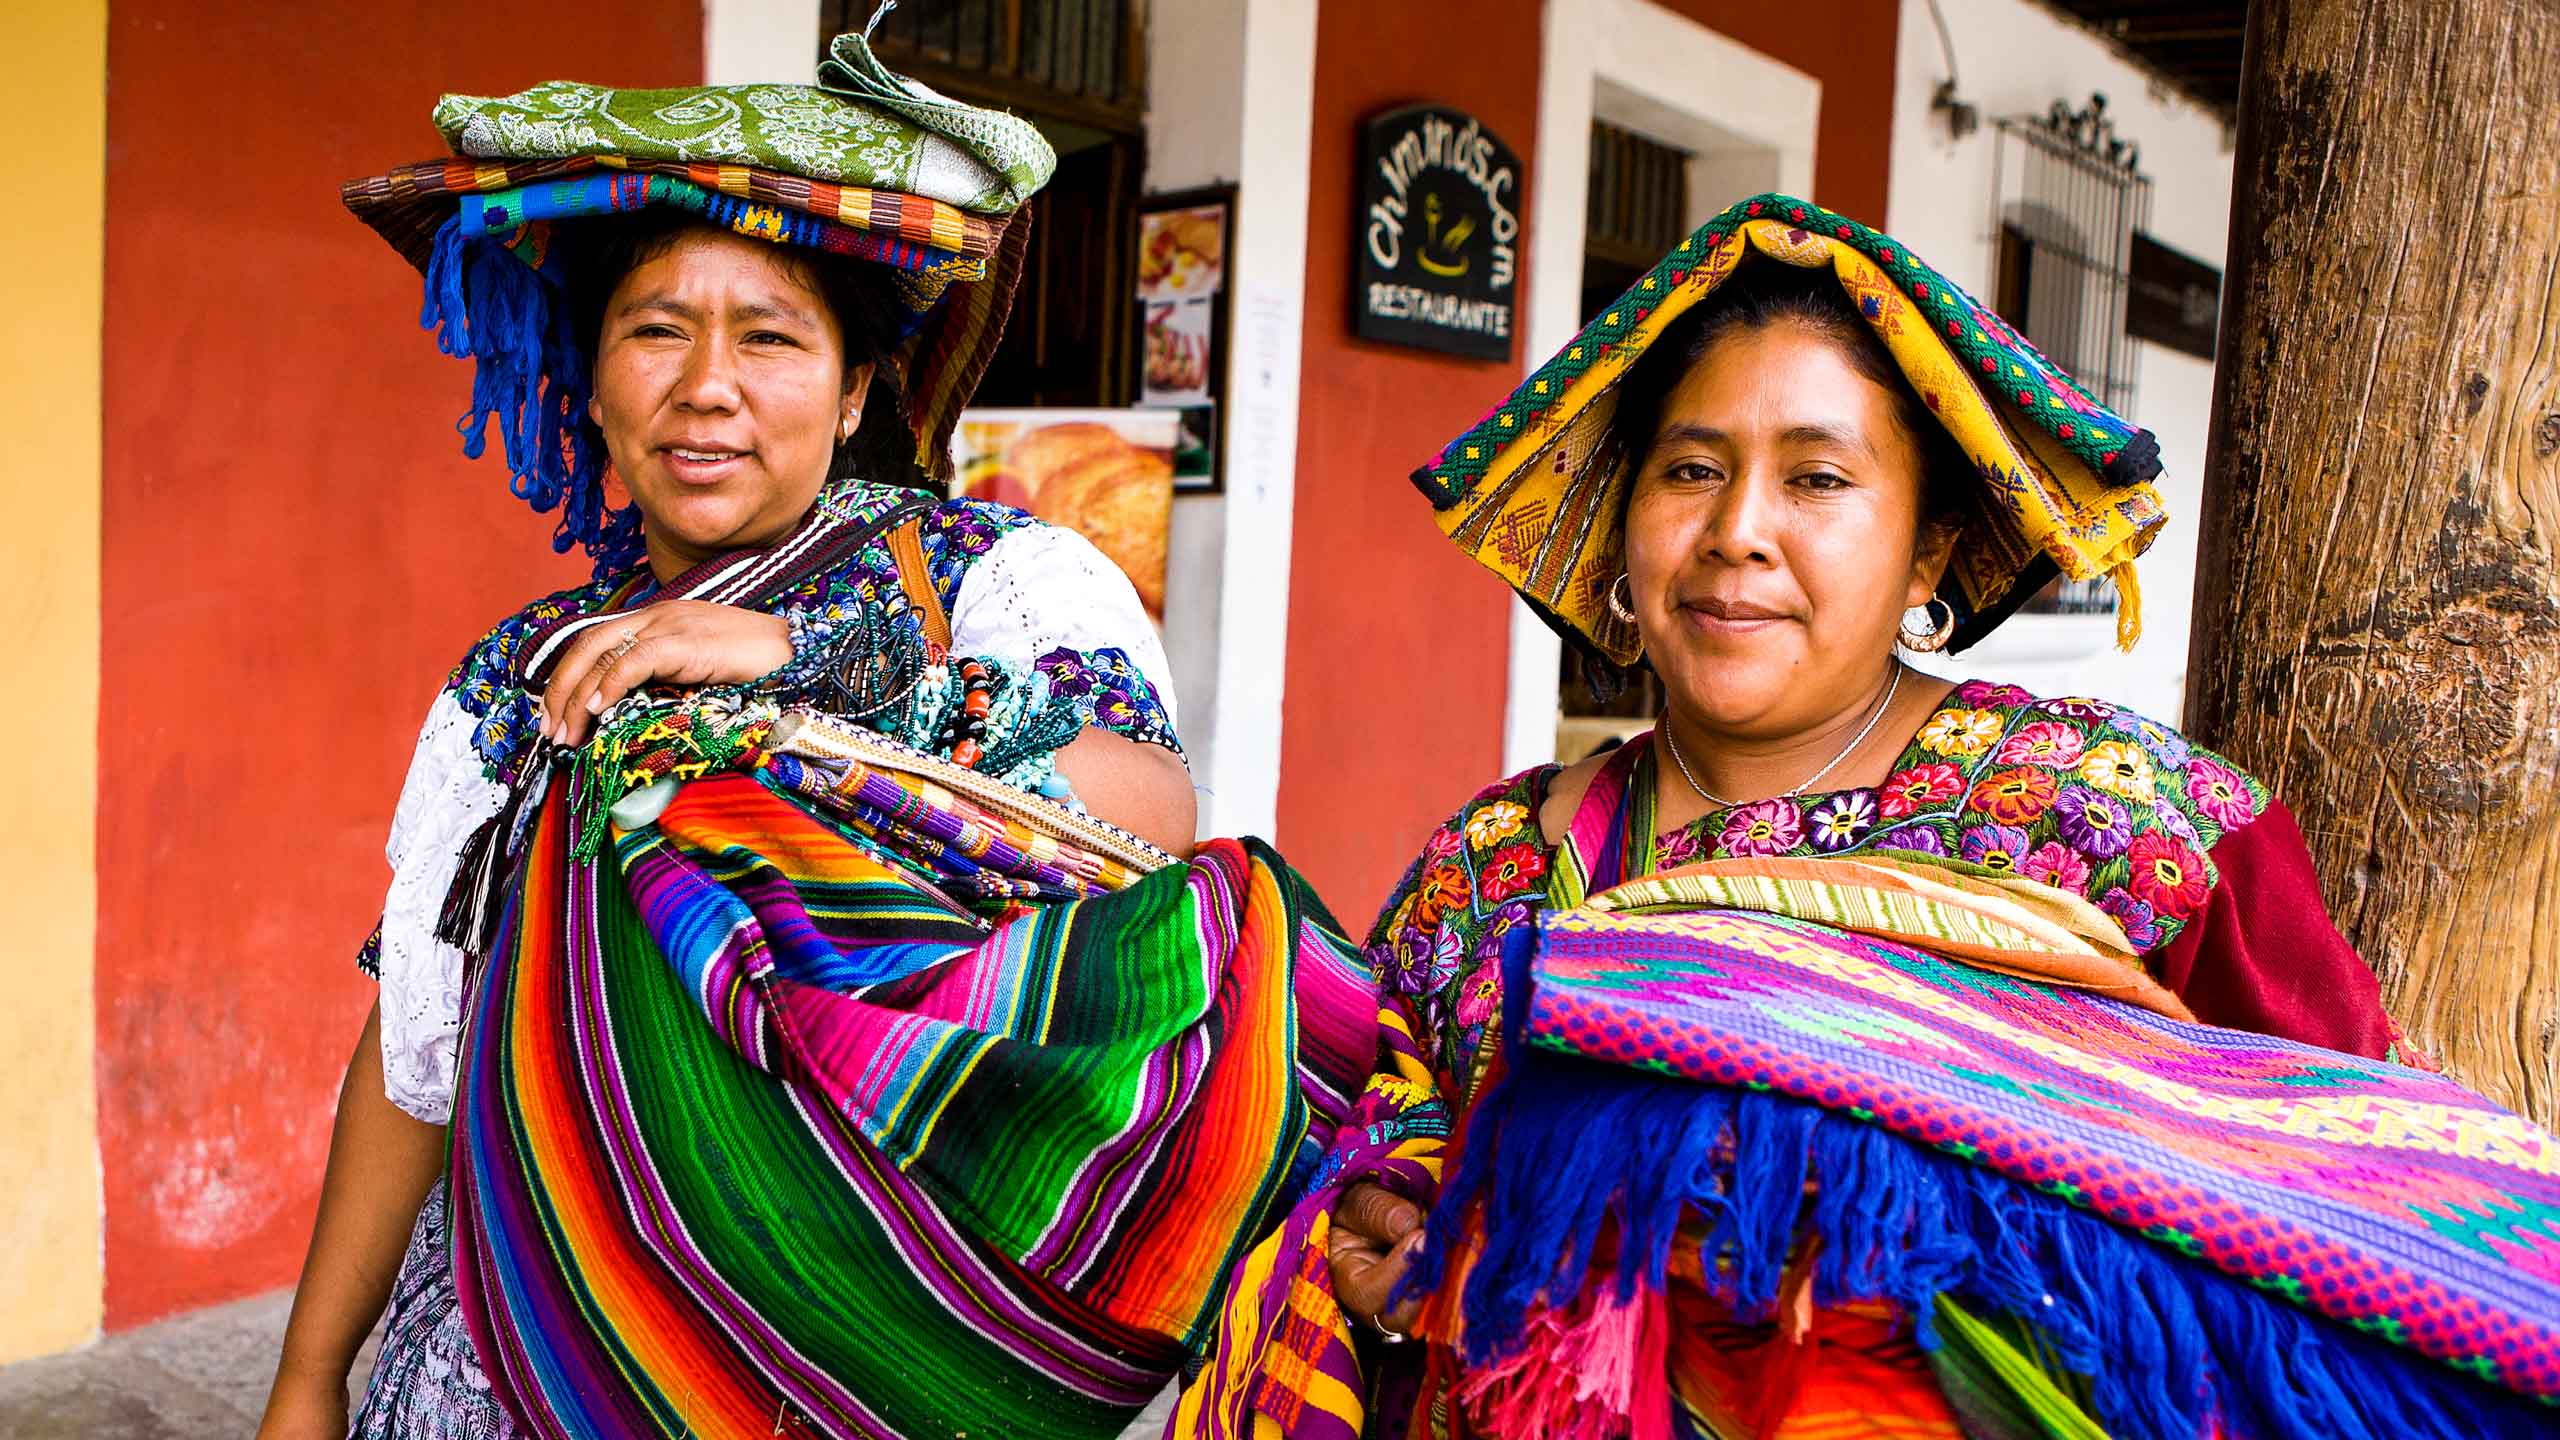 Guatemalan women in bright clothing